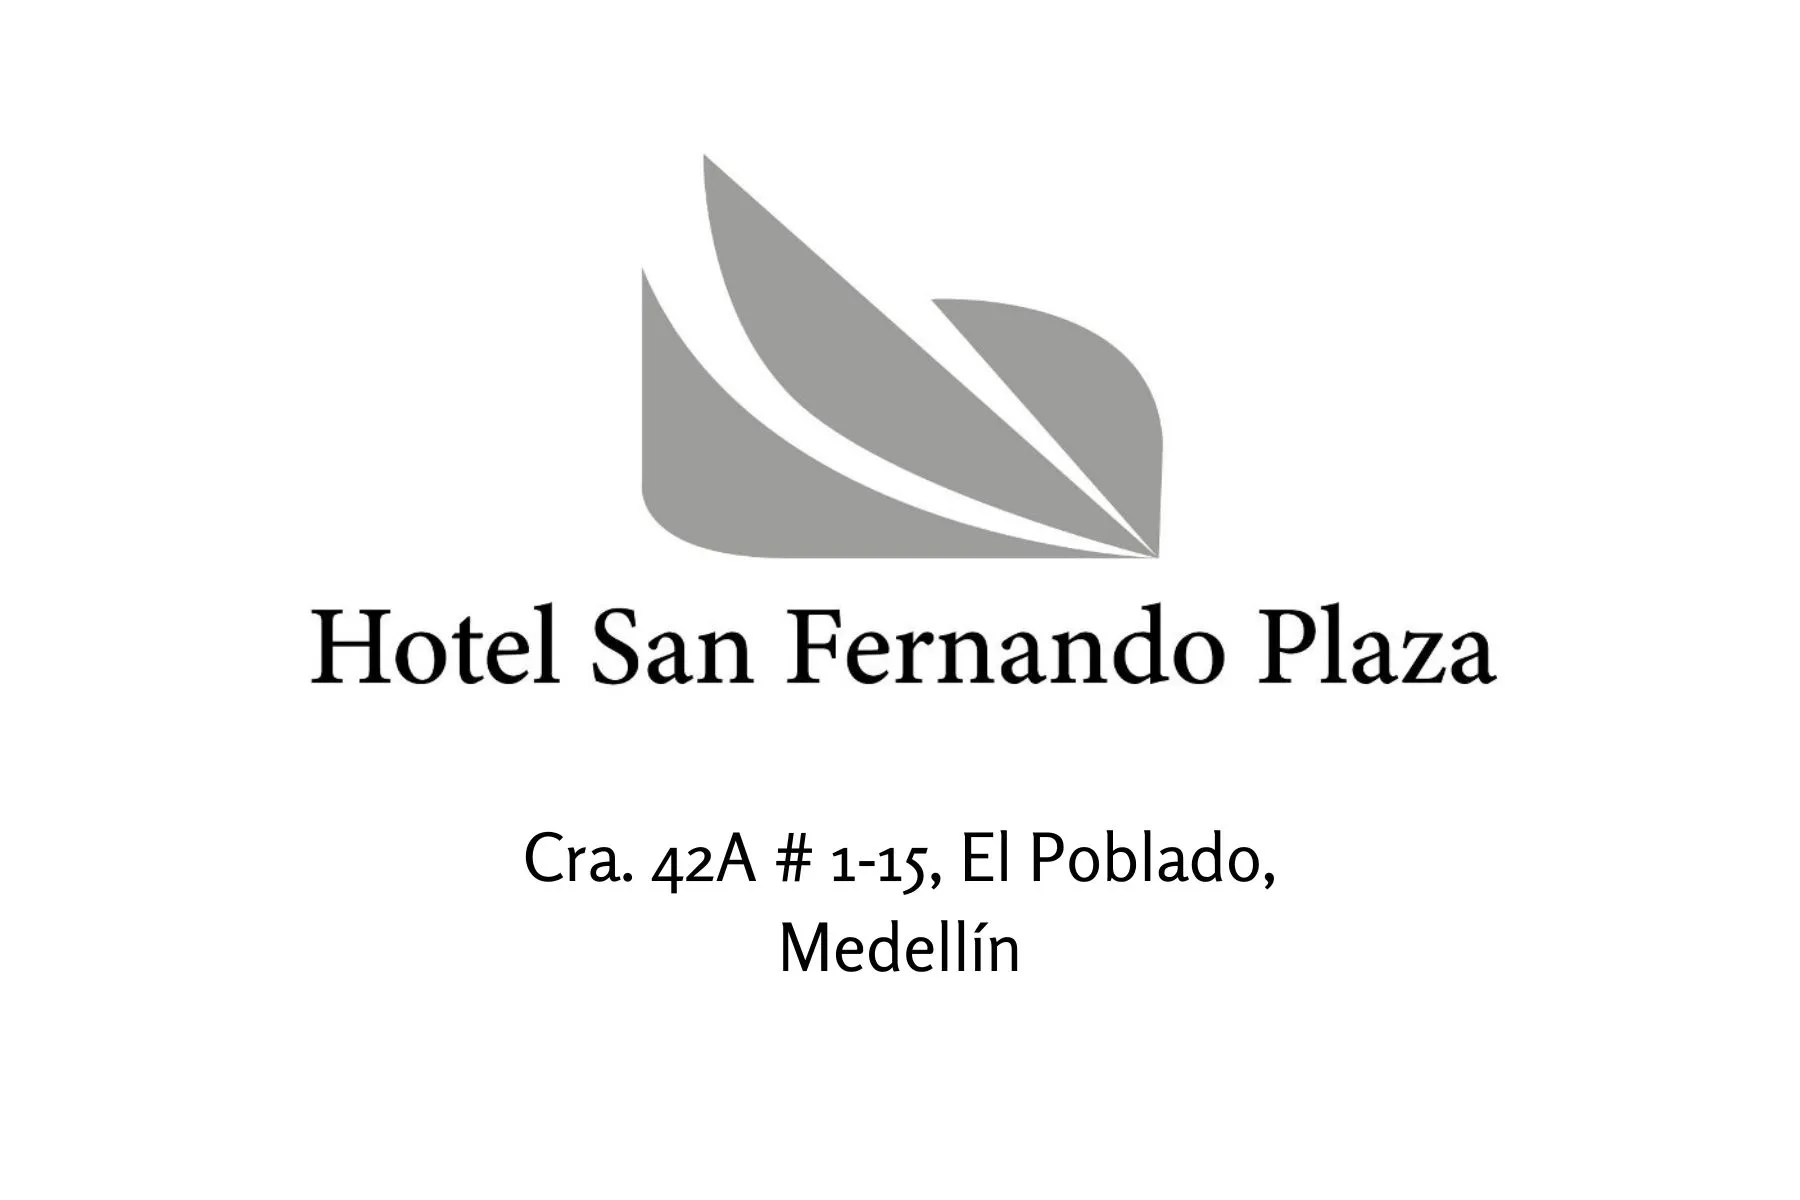 San Fernanado Plaza Hotel